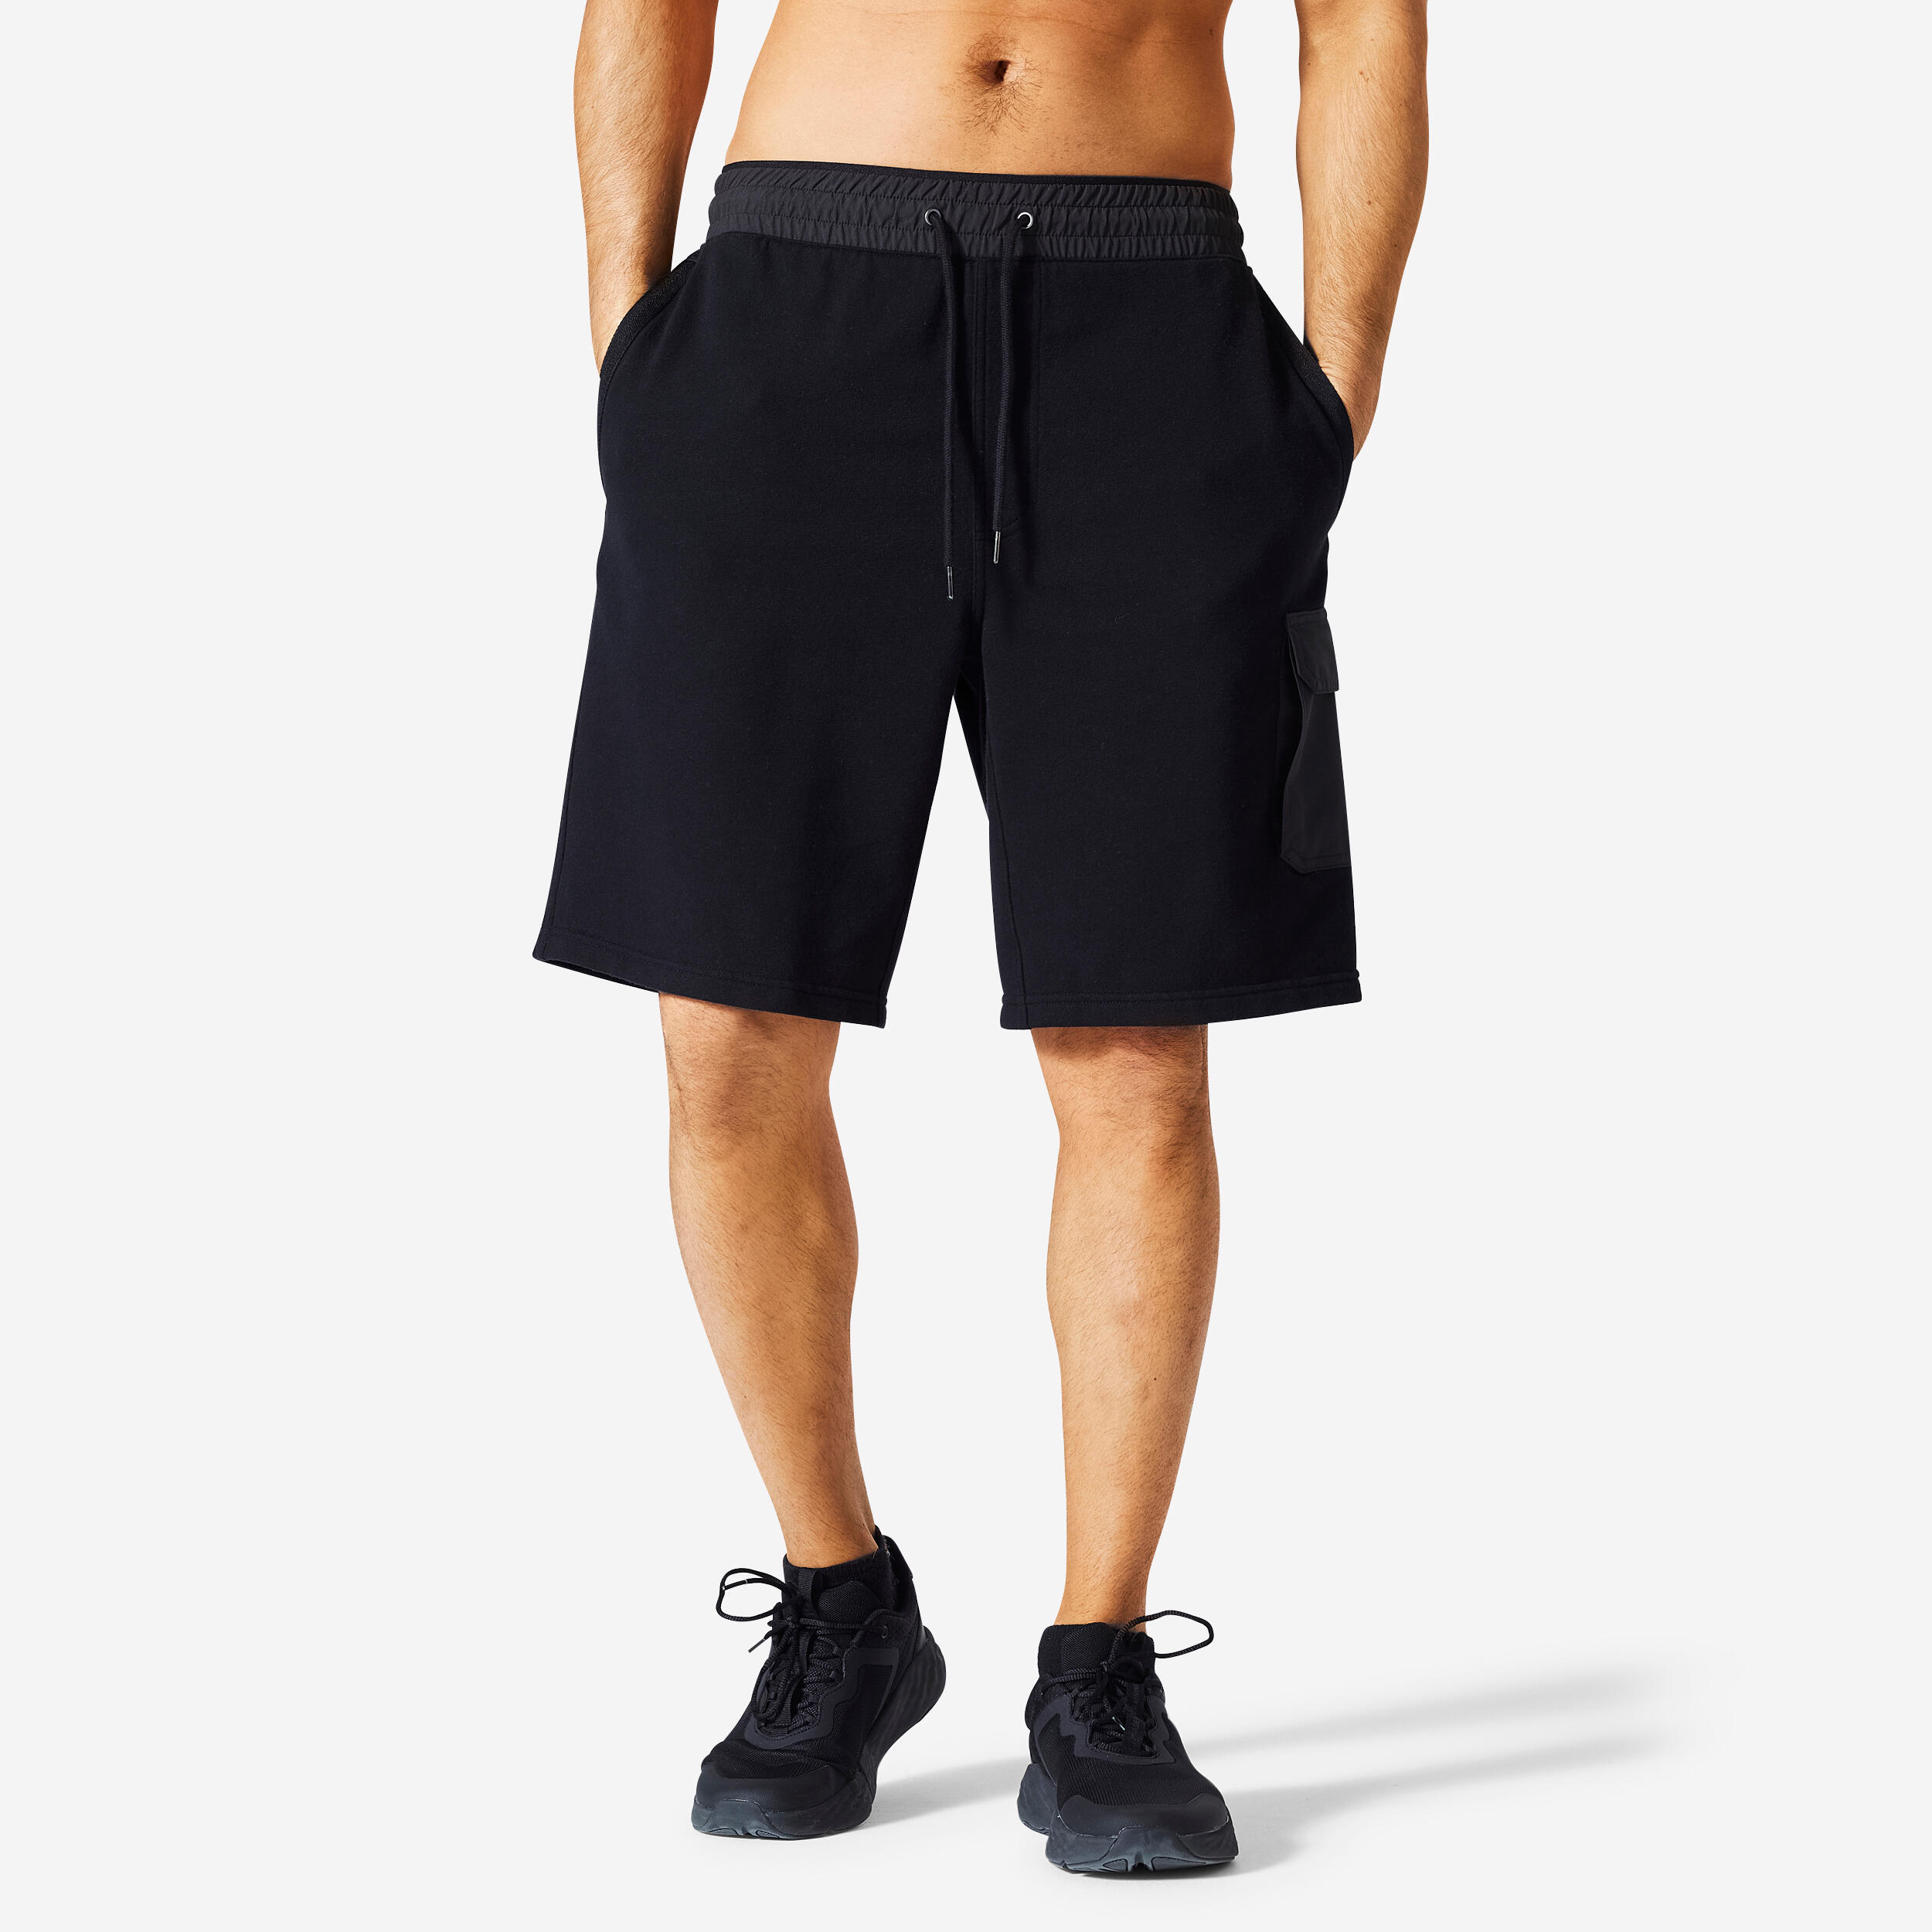 Men's Fitness Cargo Shorts 520 - Black